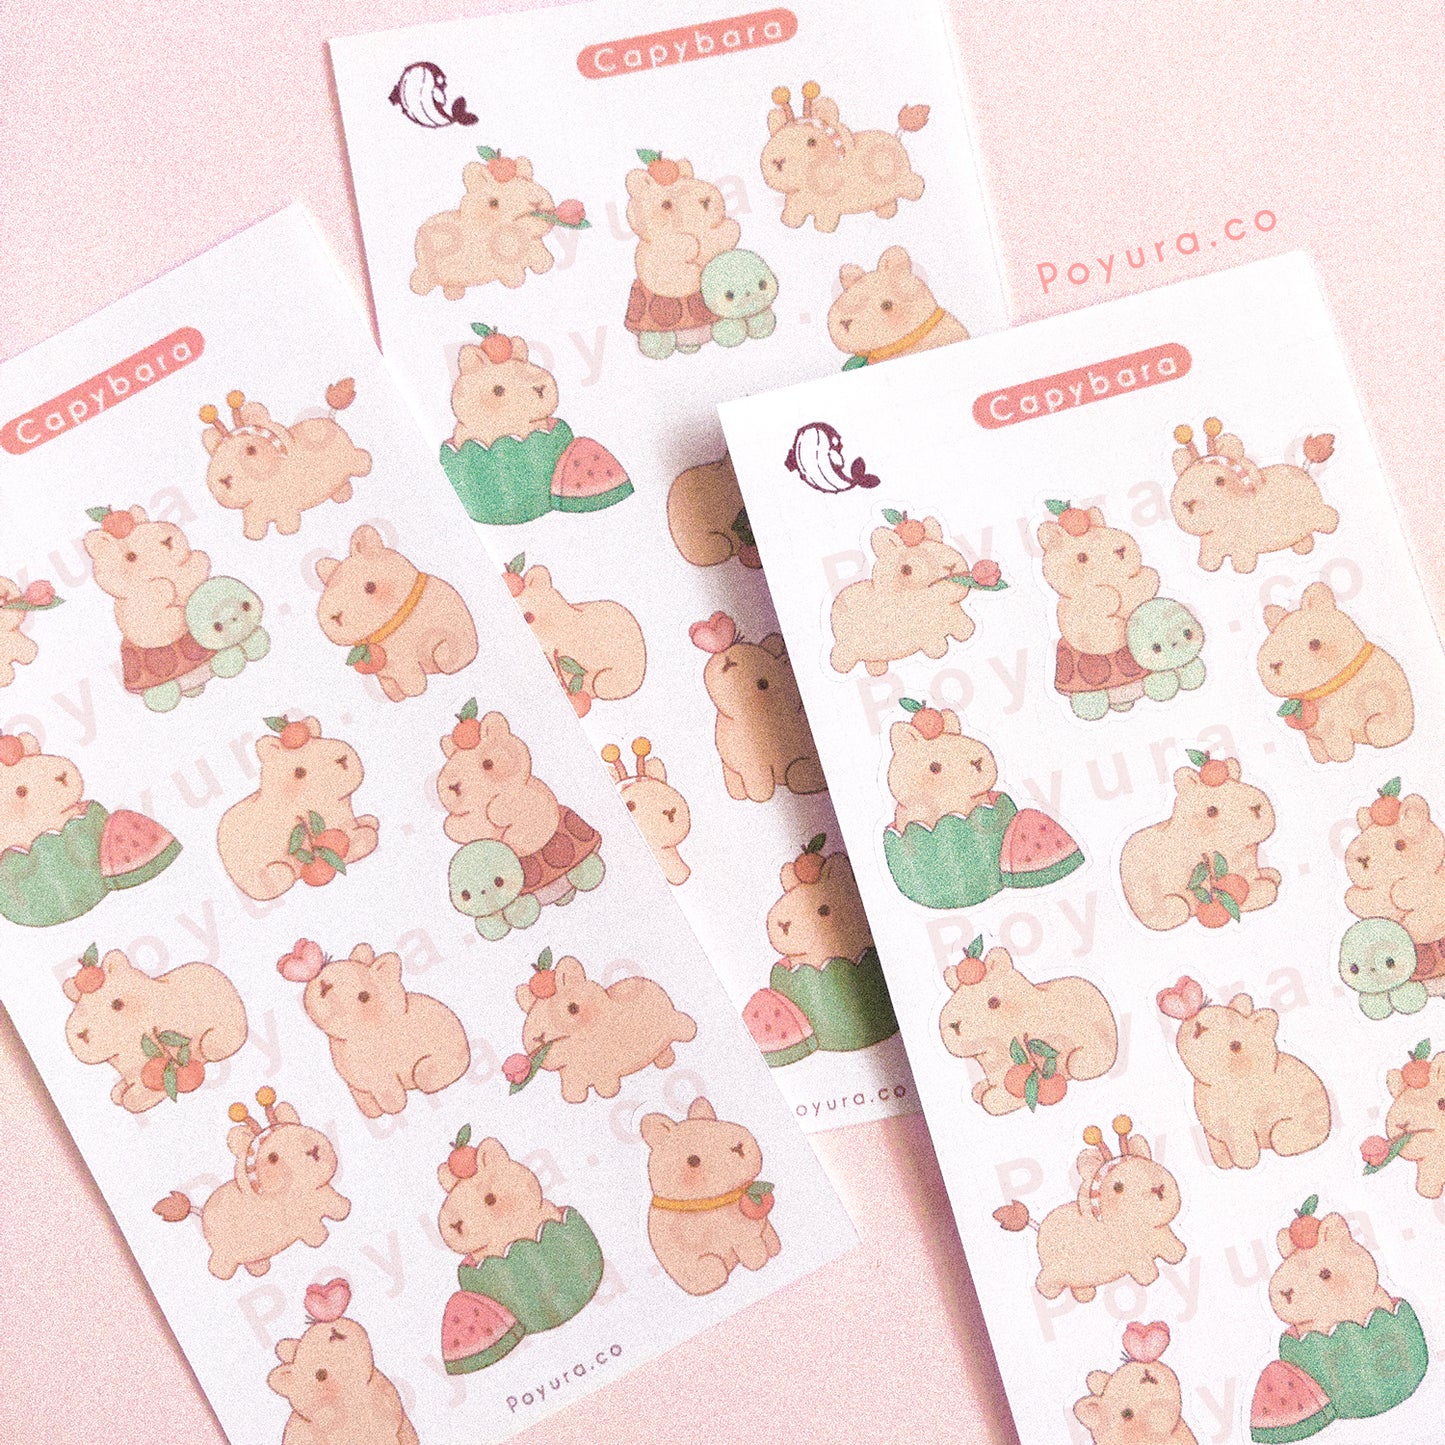 Capybara friends Japan watermelon food aesthetic cute polco deco kpop journal toploader sticker sheet